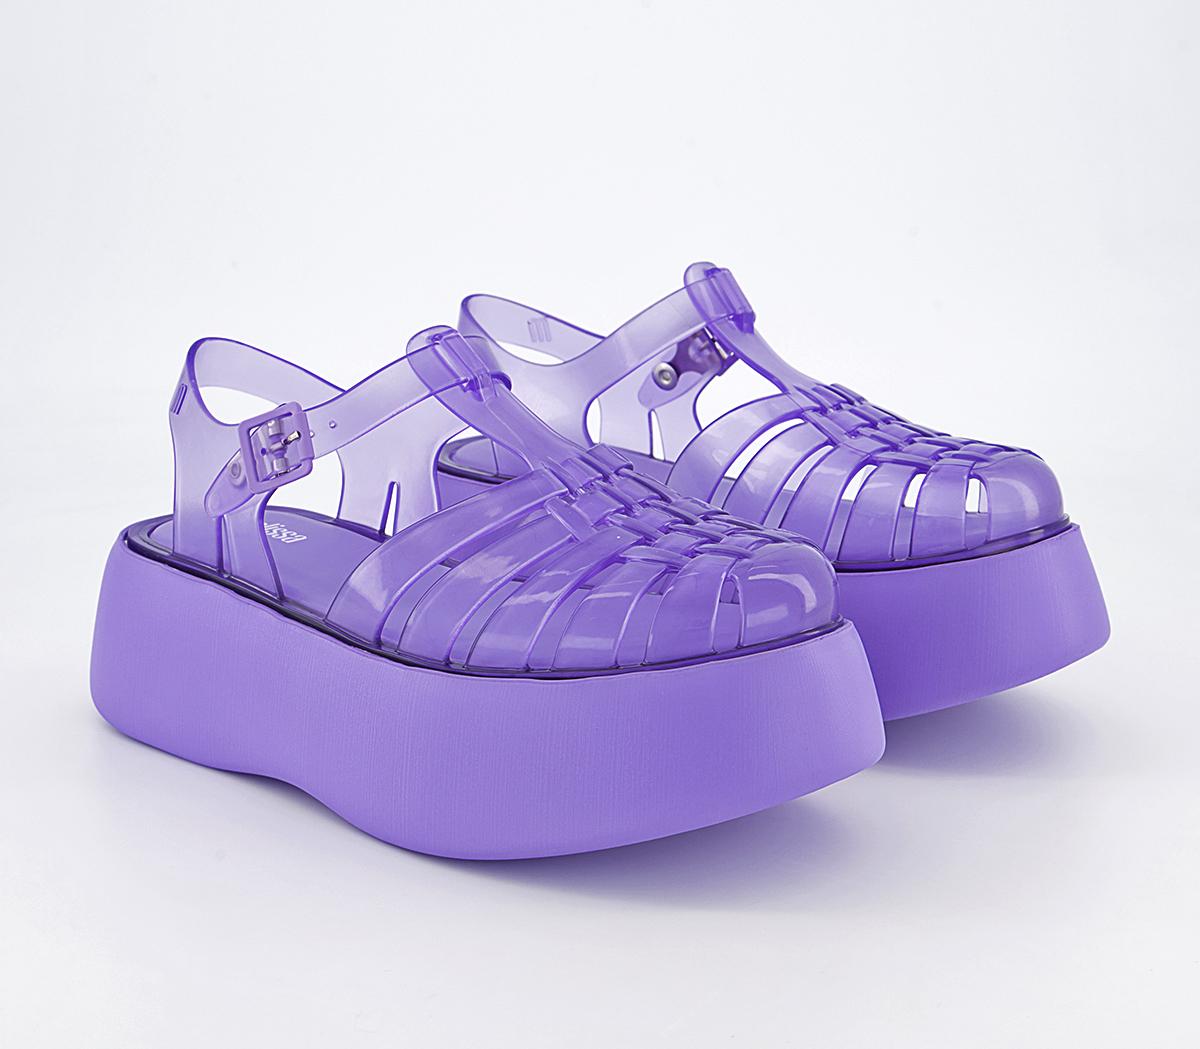 Melissa Melissa Possession Plato Sandals Violet Trans - Jelly Shoes